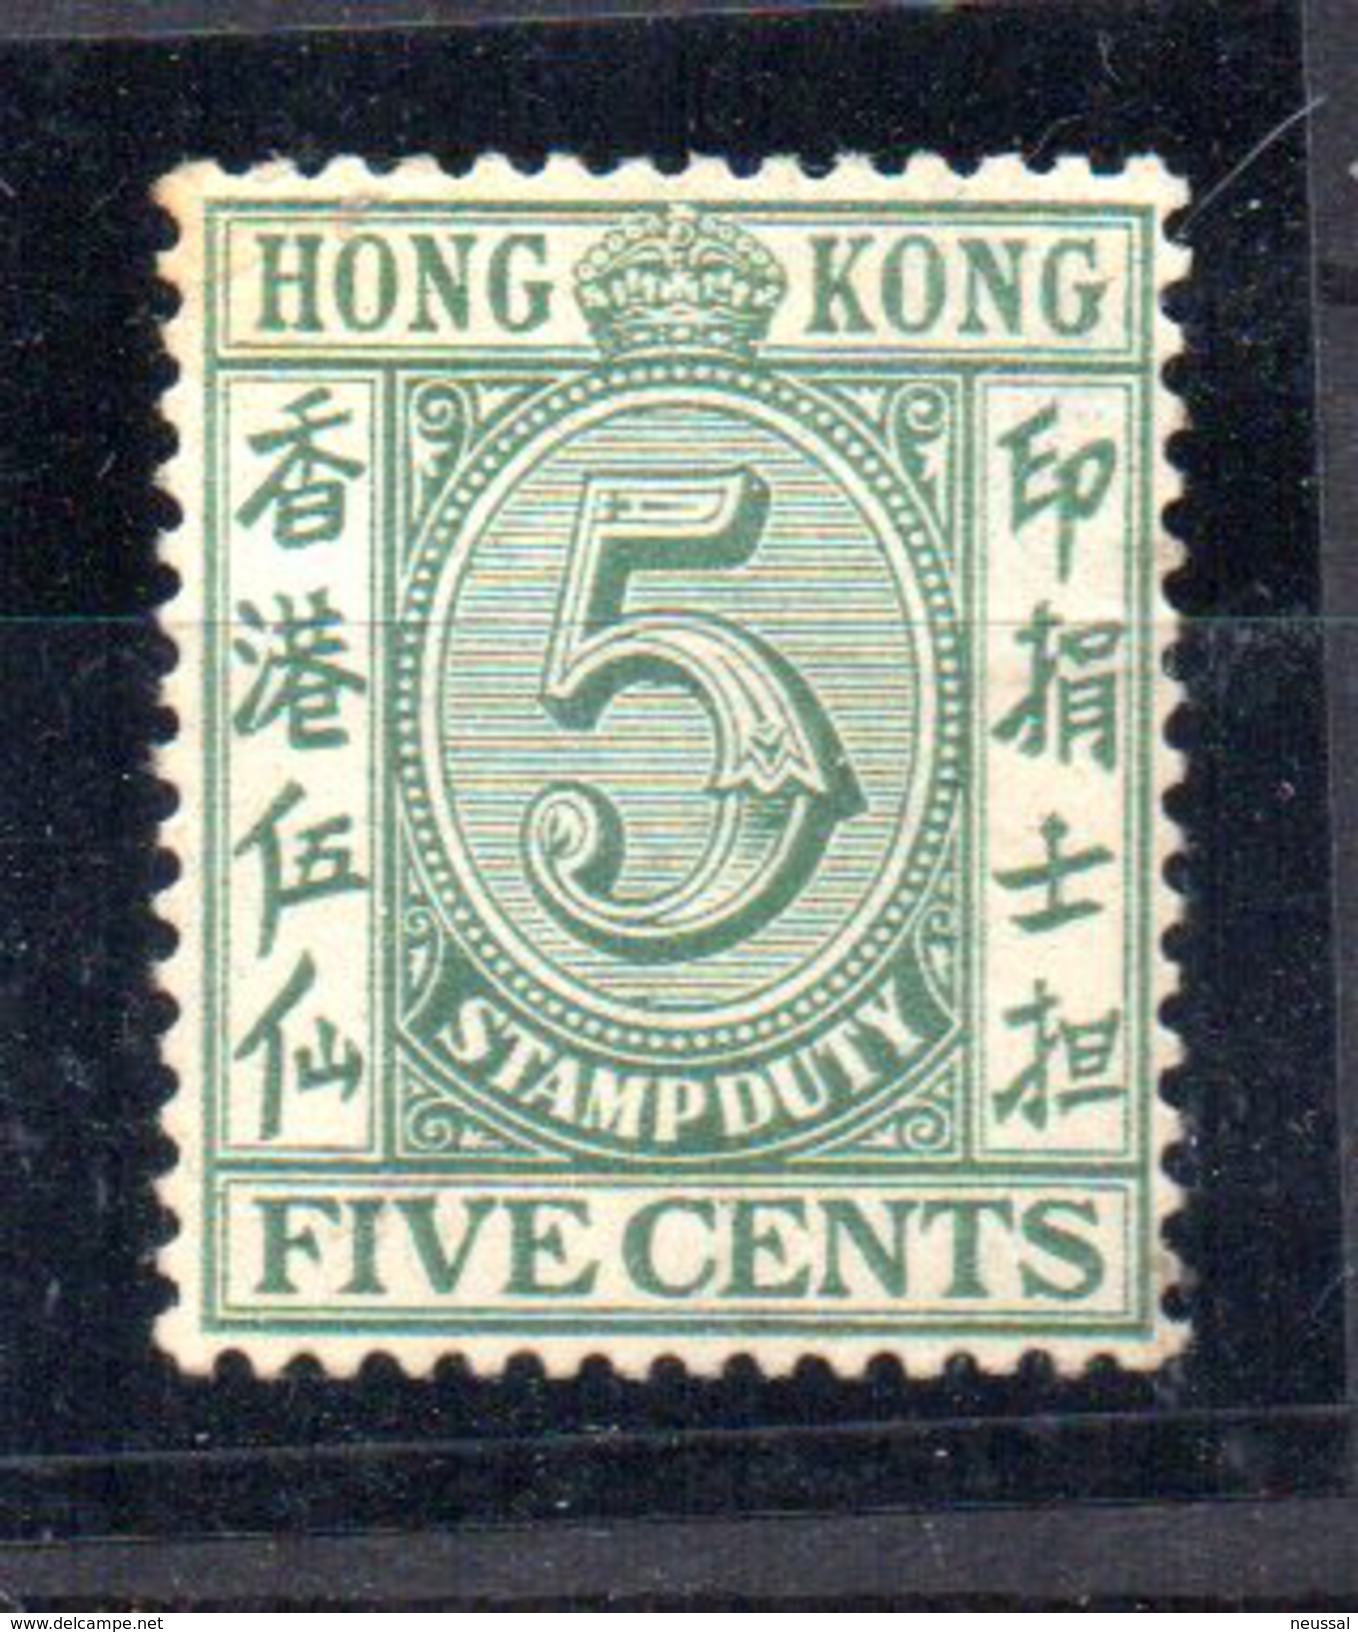 Sello Franquicia Postal Nº 15 Hong Kong. - Stempelmarke Als Postmarke Verwendet